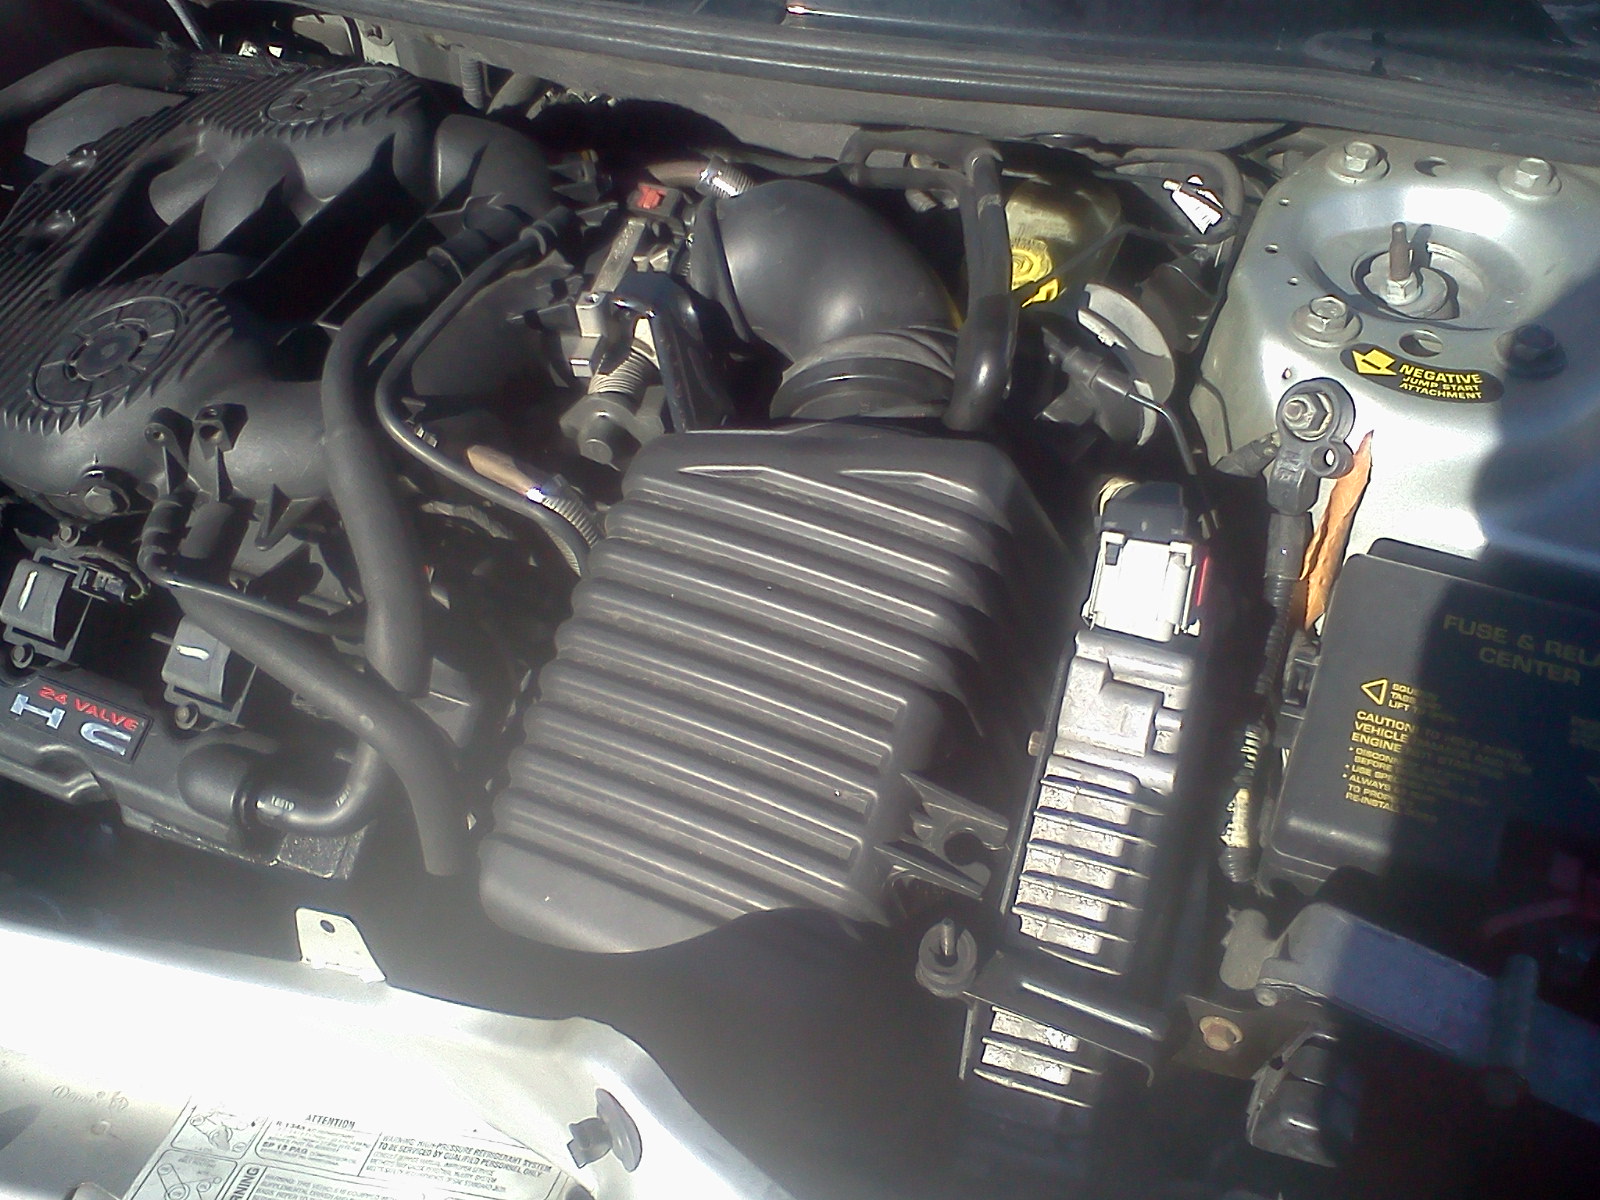 2001 Chrysler sebring lxi engine problems #3